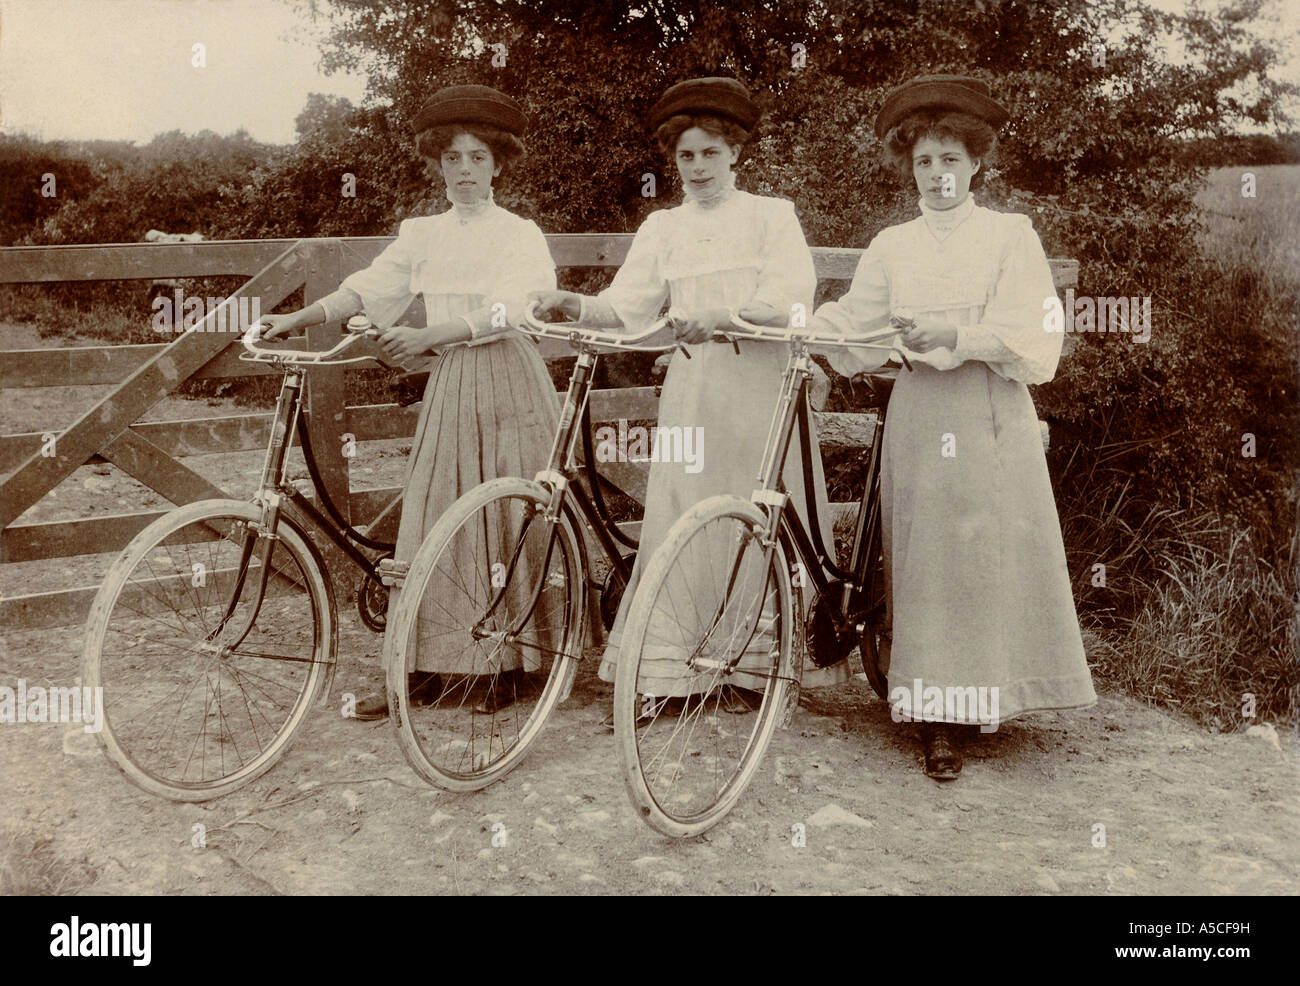 Original photograph of  group of Edwardian lady cyclists enjoying the countryside, recreational recreation, pastimes, vintage cycling circa 1910, U.K. Stock Photo